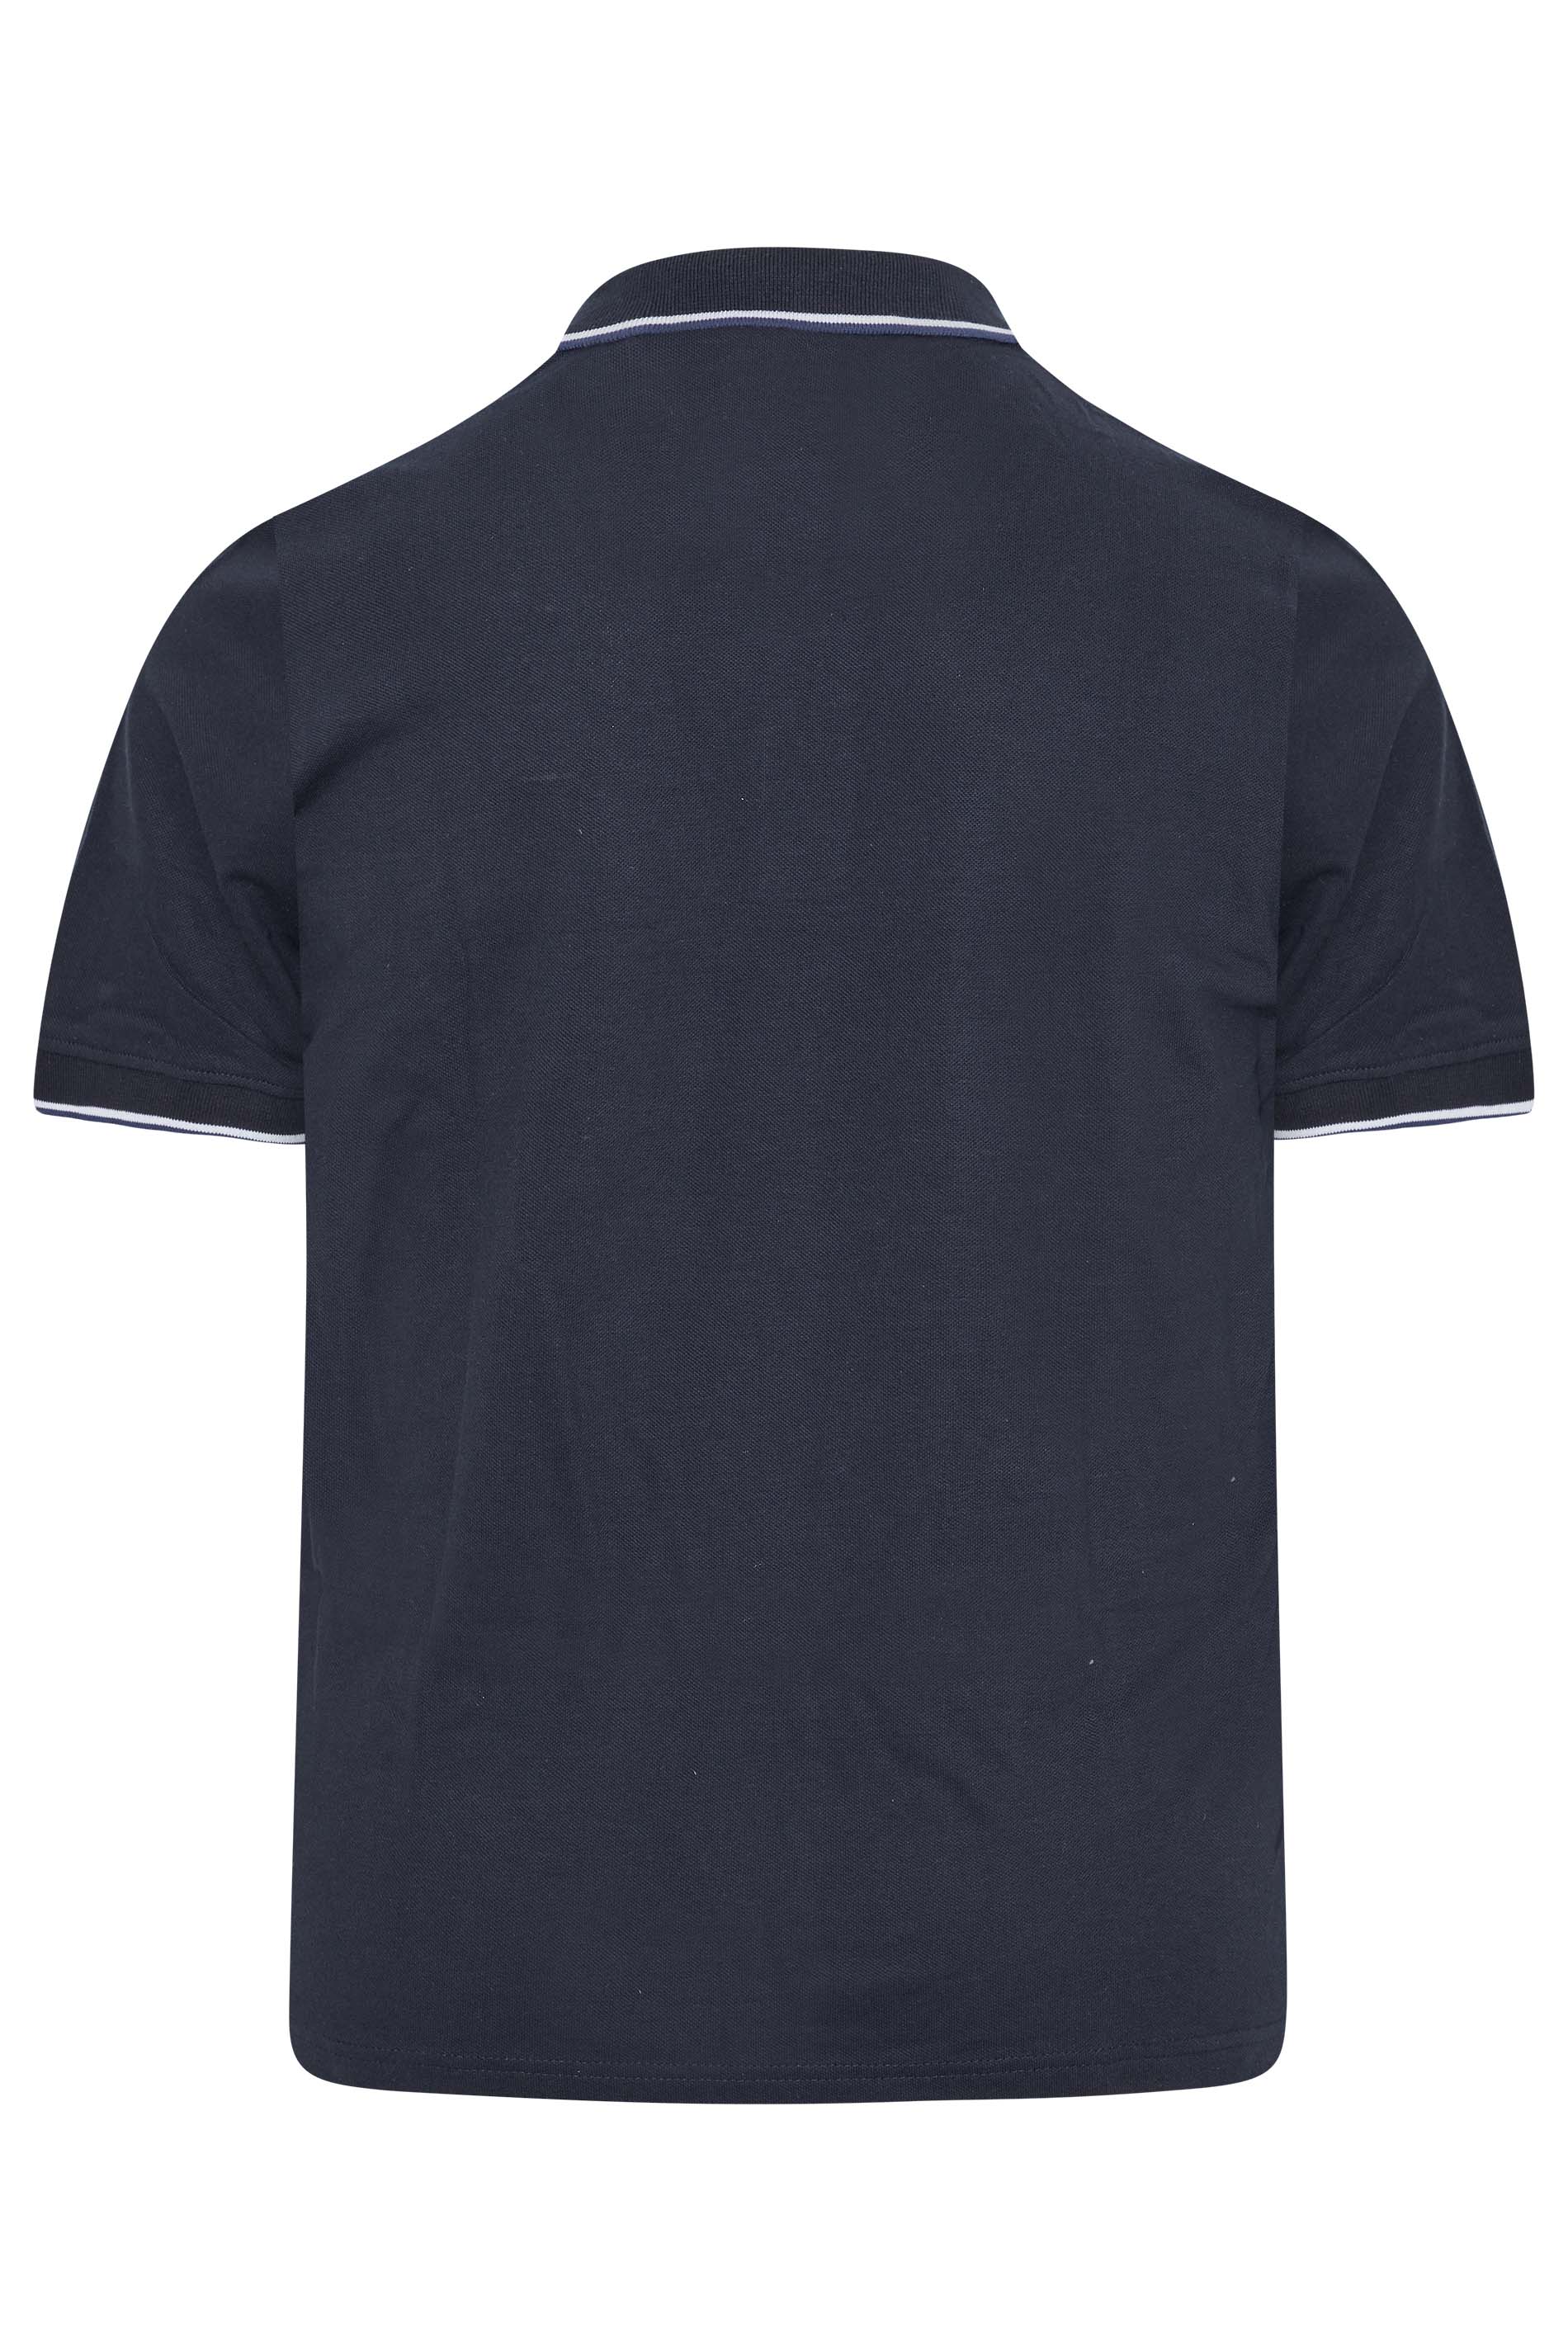 BadRhino Navy Blue 3 Pack Essential Tipped Polo Shirts | BadRhino